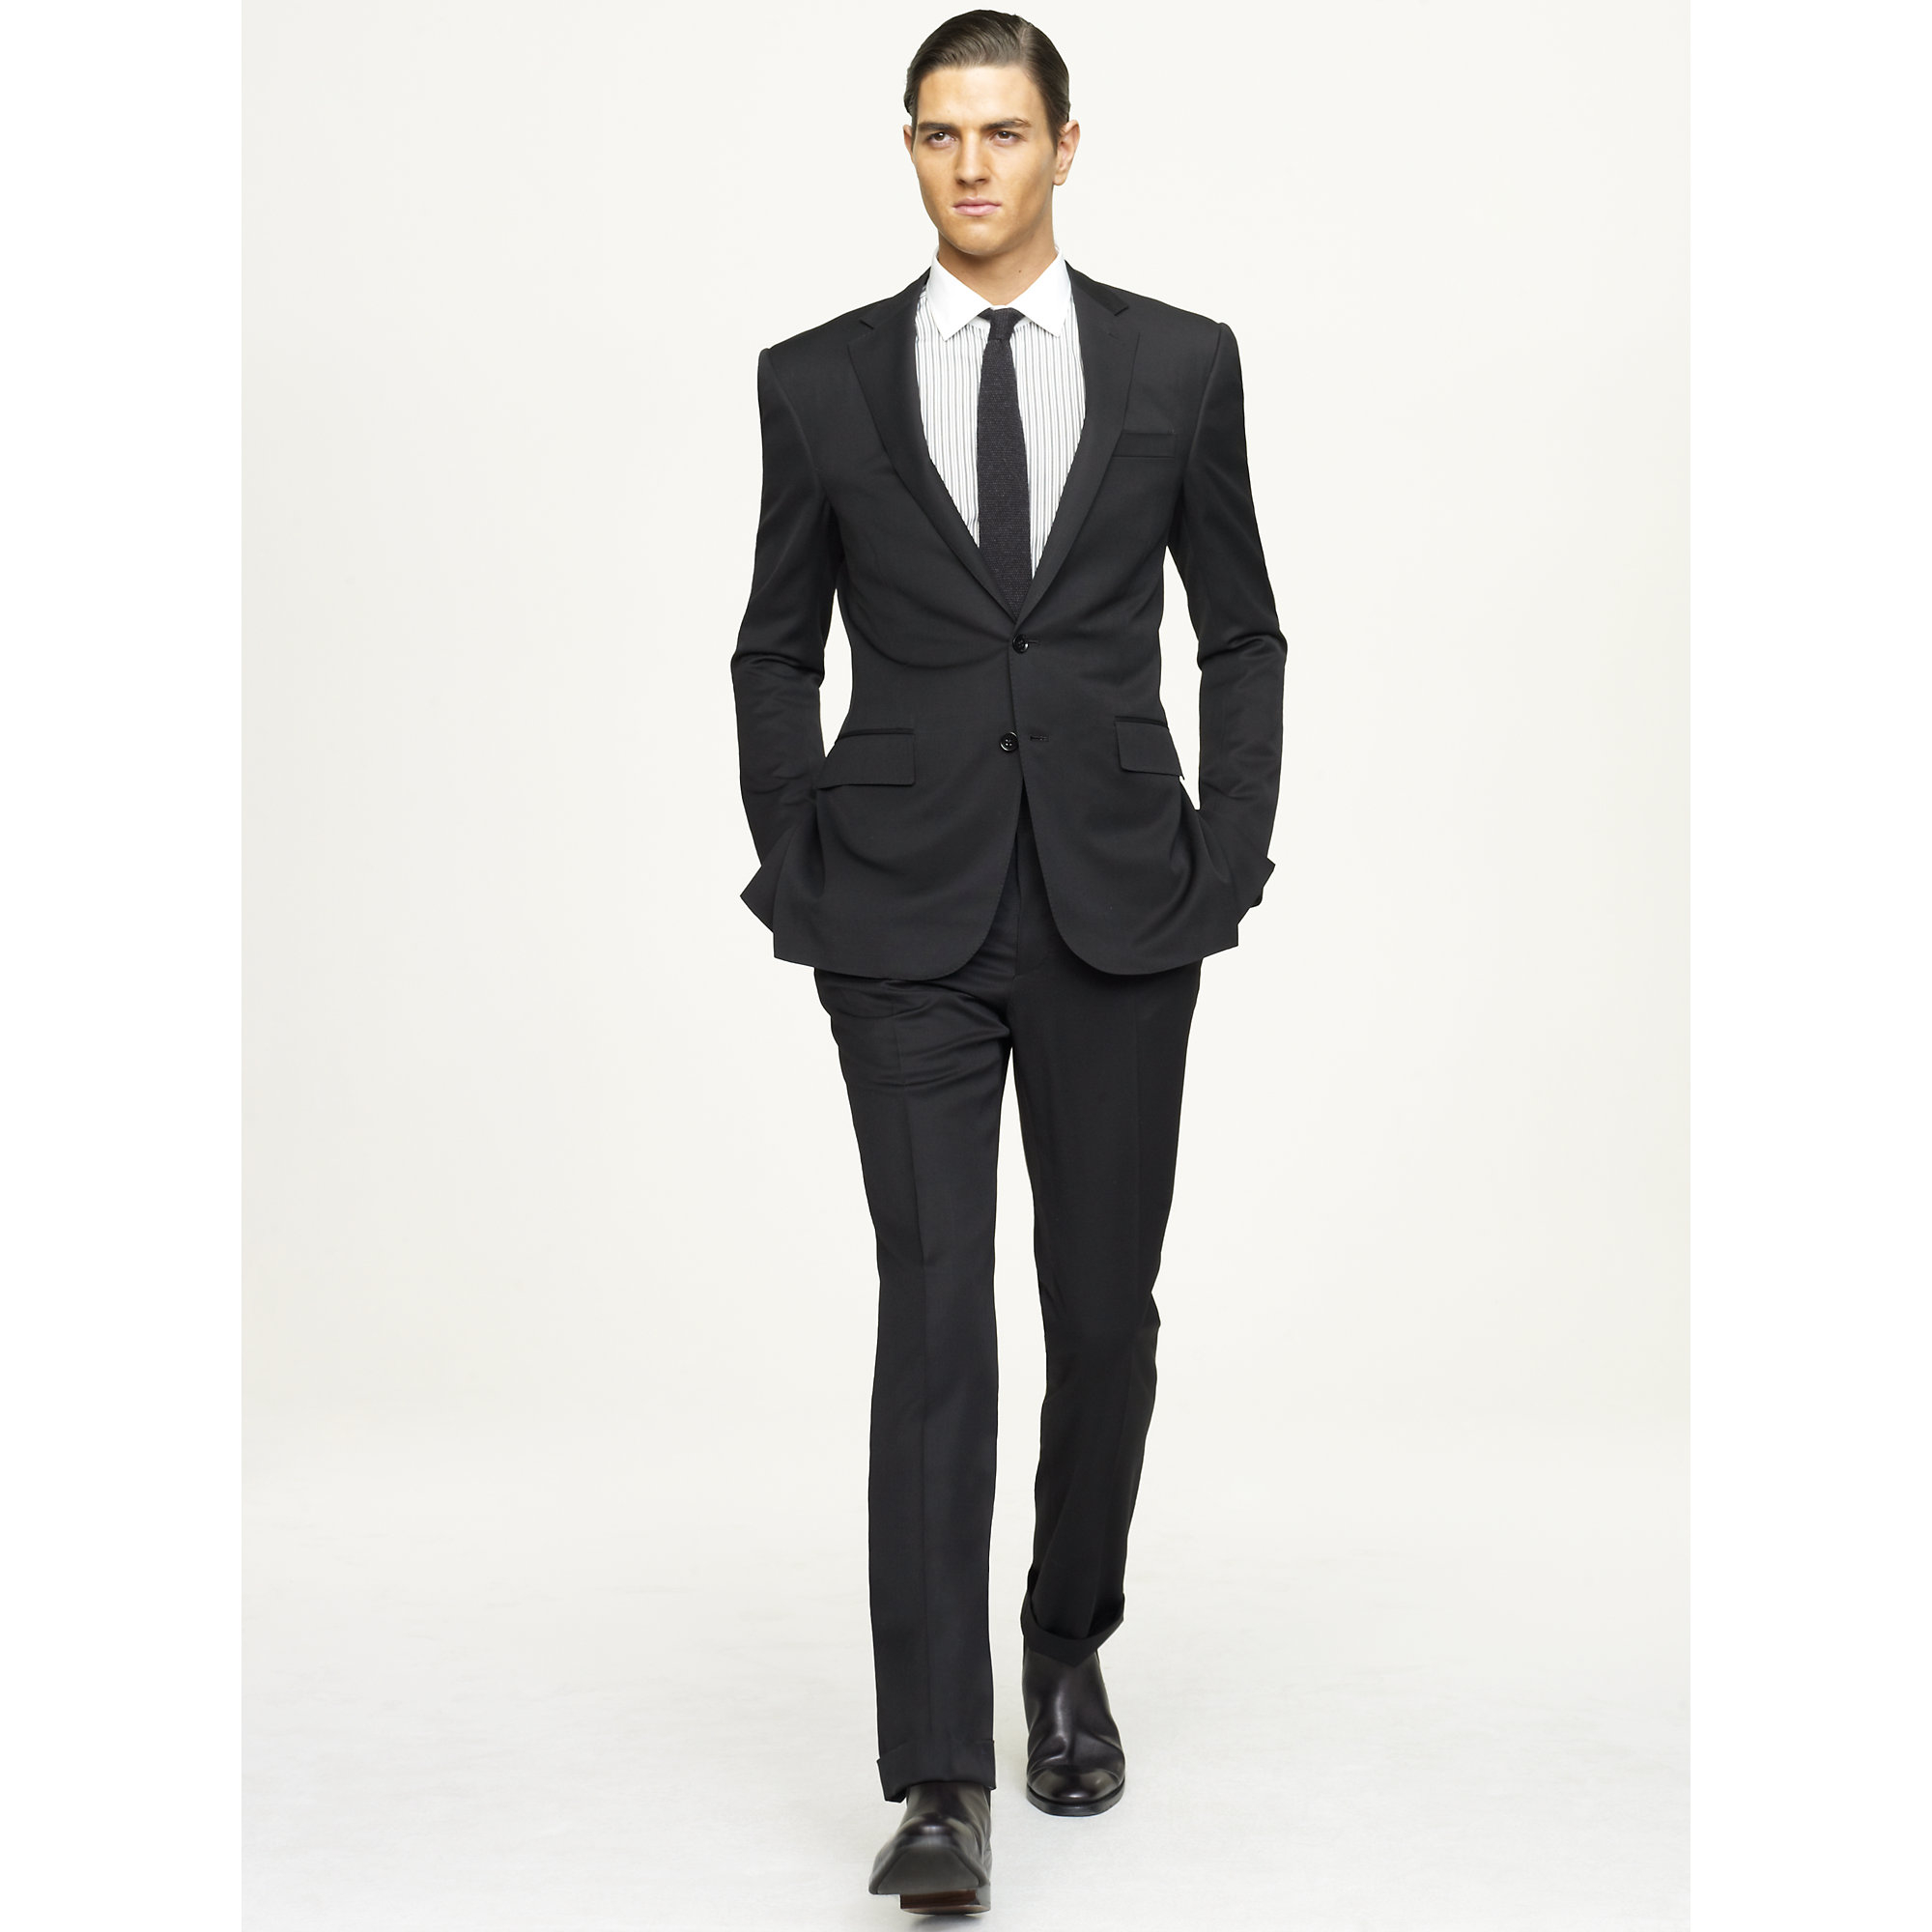 Lyst - Ralph lauren black label Anthony Solid Suit in Black for Men